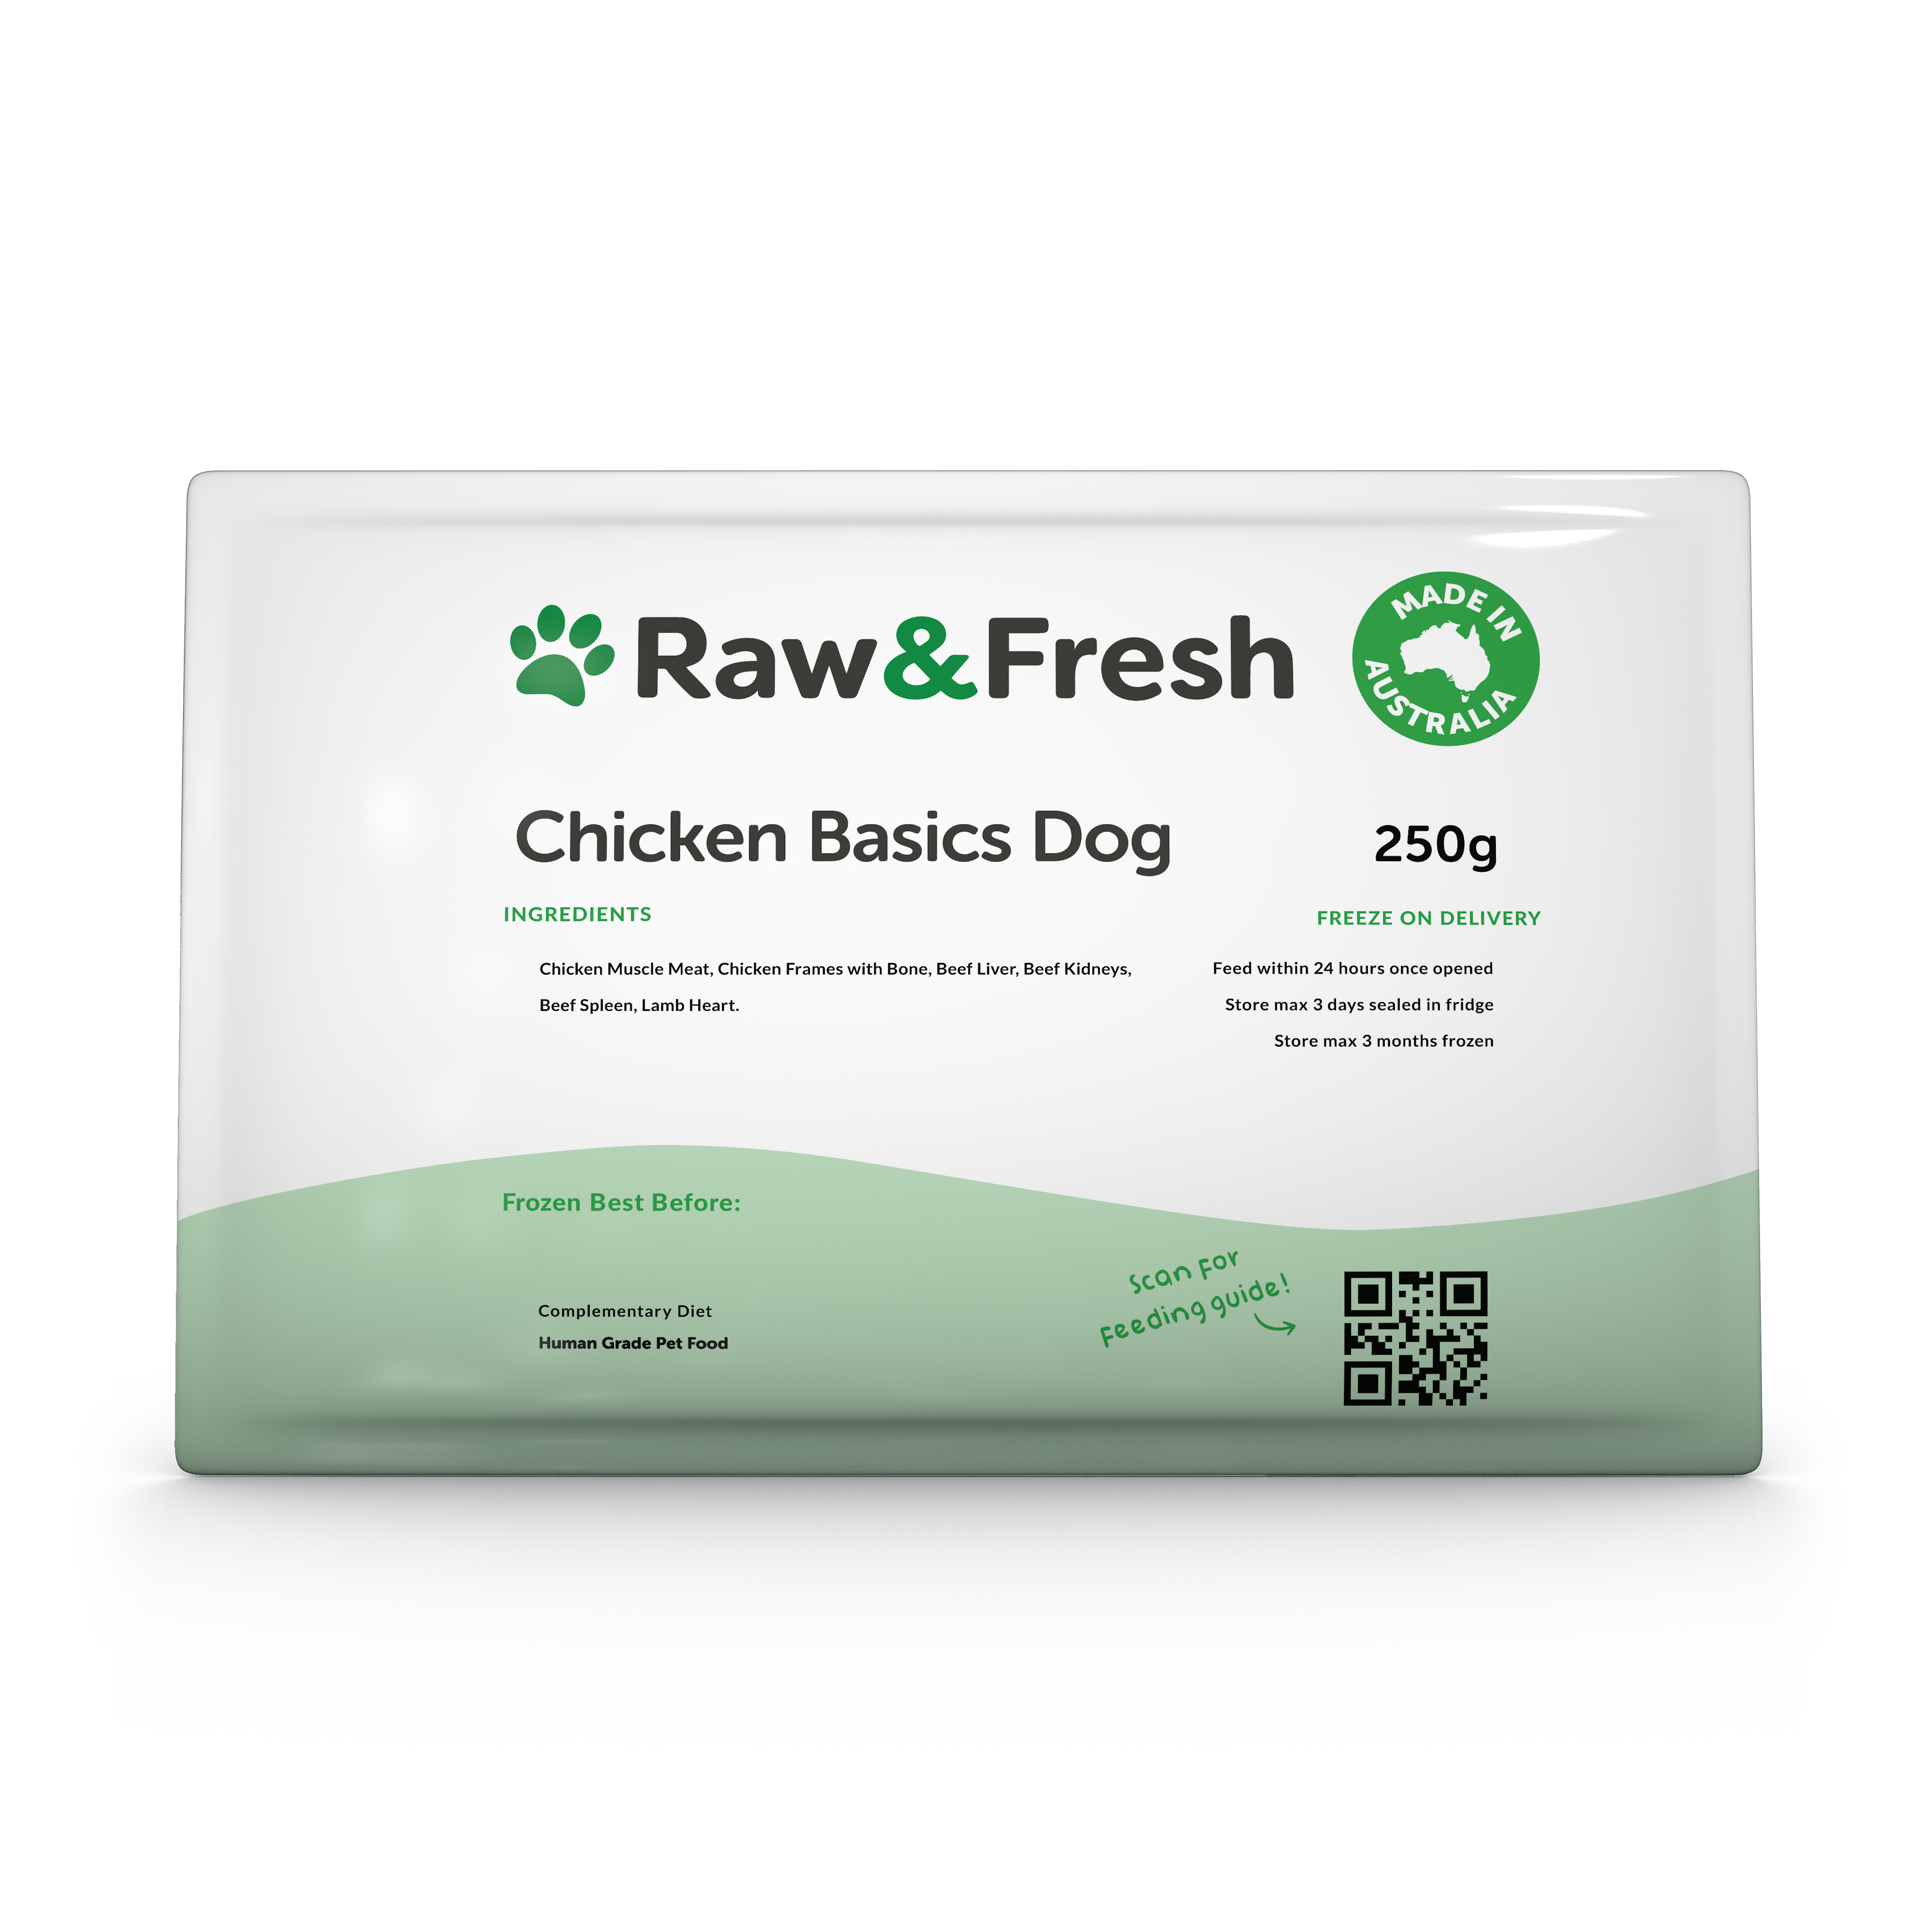 Chicken Basics Dog - 250g Pack